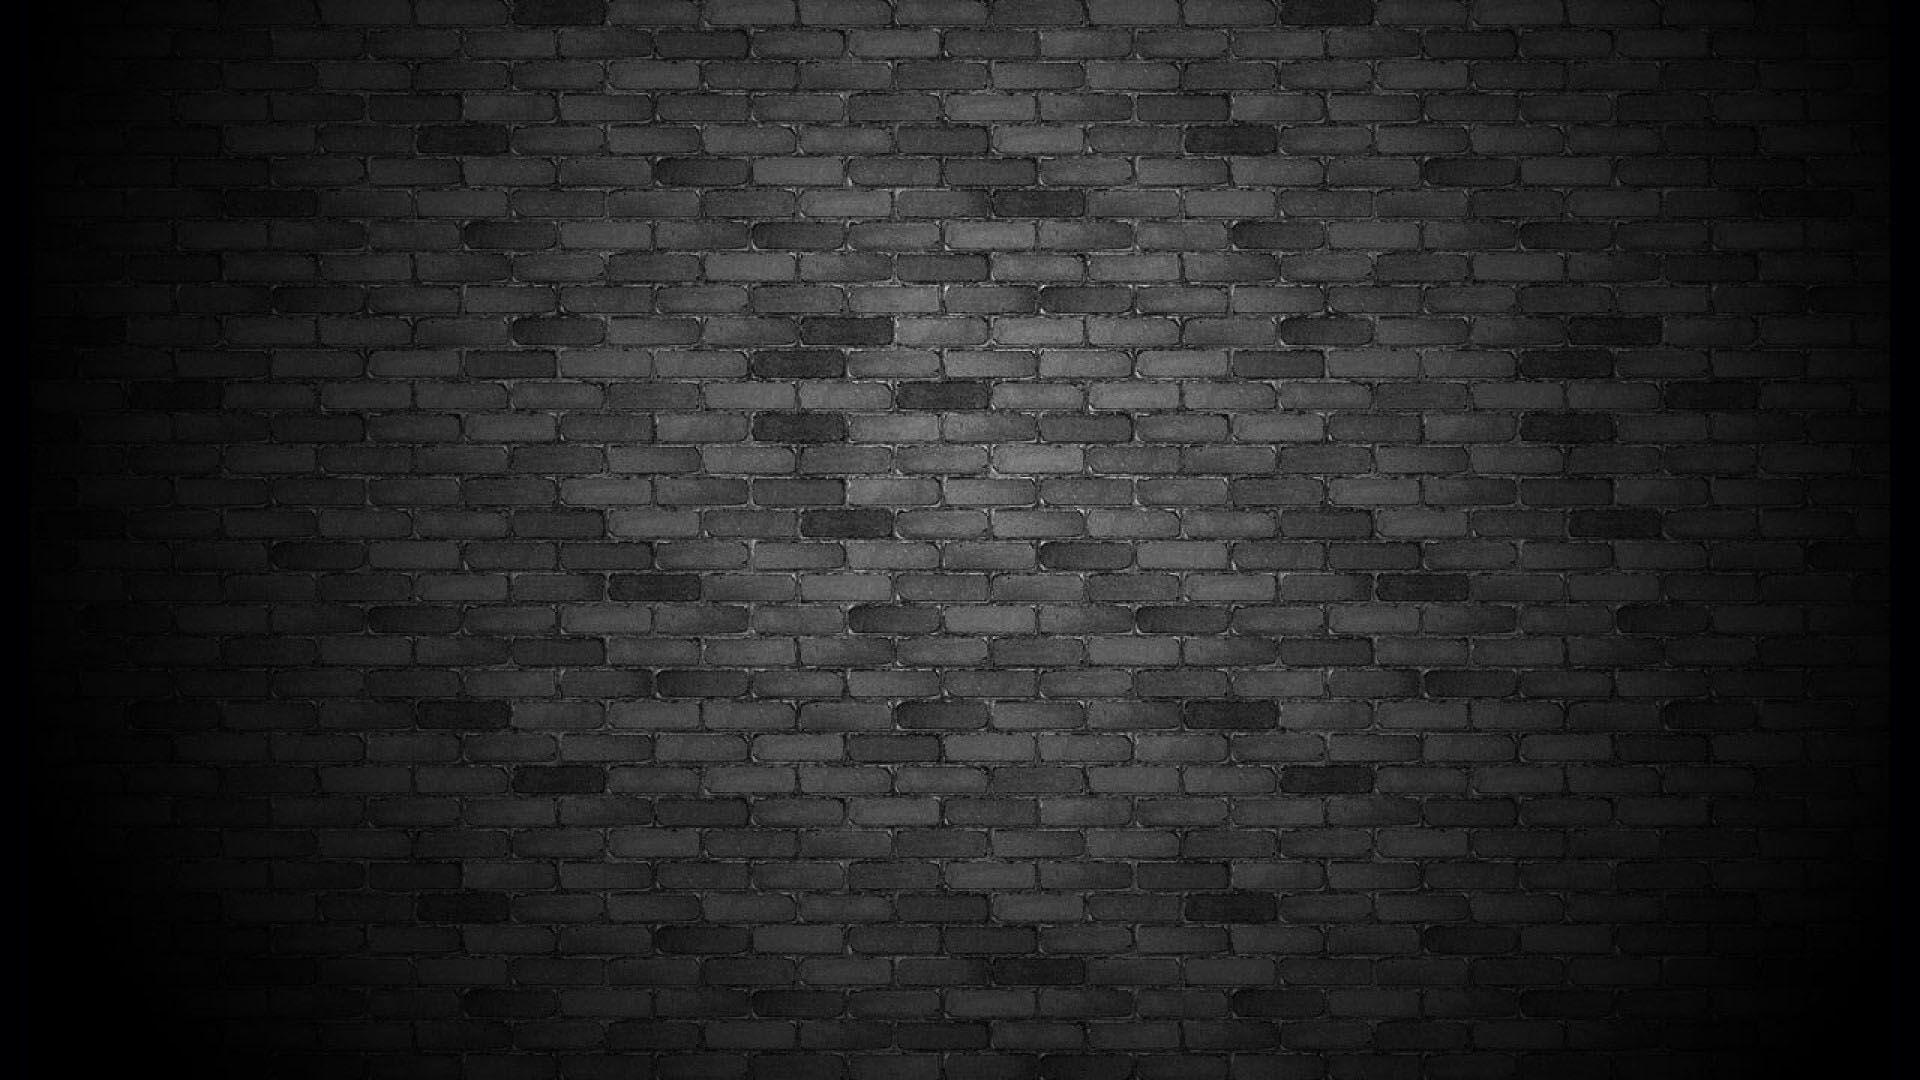 brick wall background black and white pergola Dining. Background